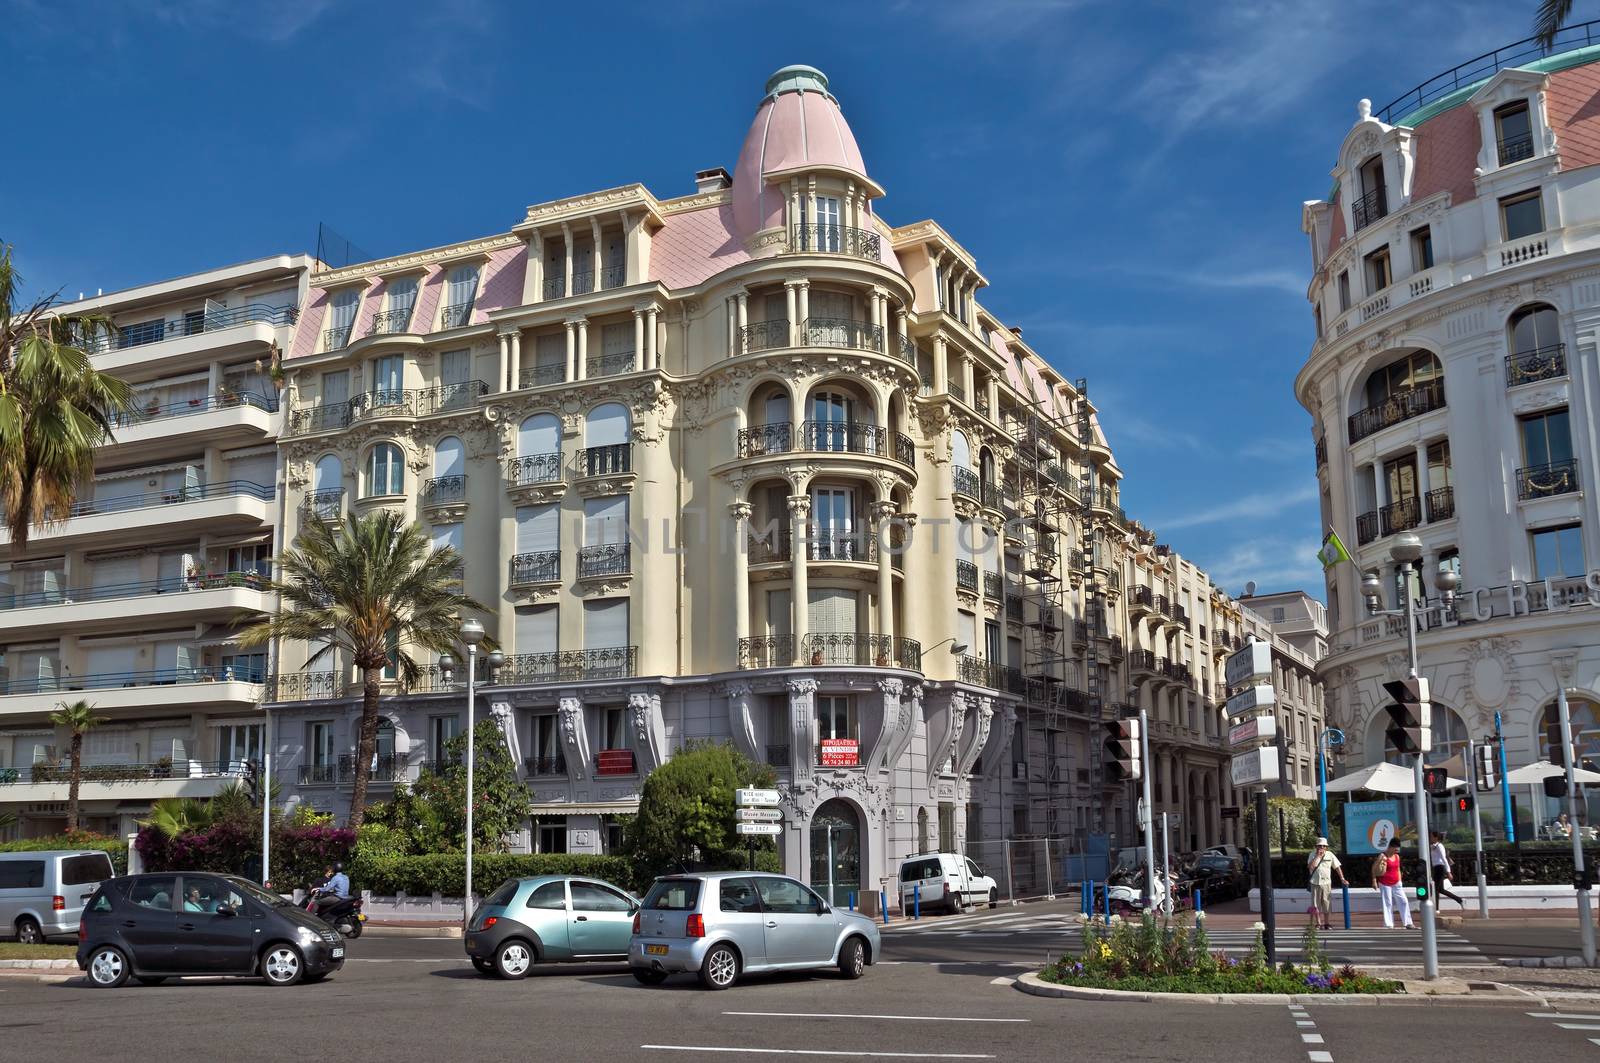 City of Nice - Architecture along Promenade des Anglais by Venakr